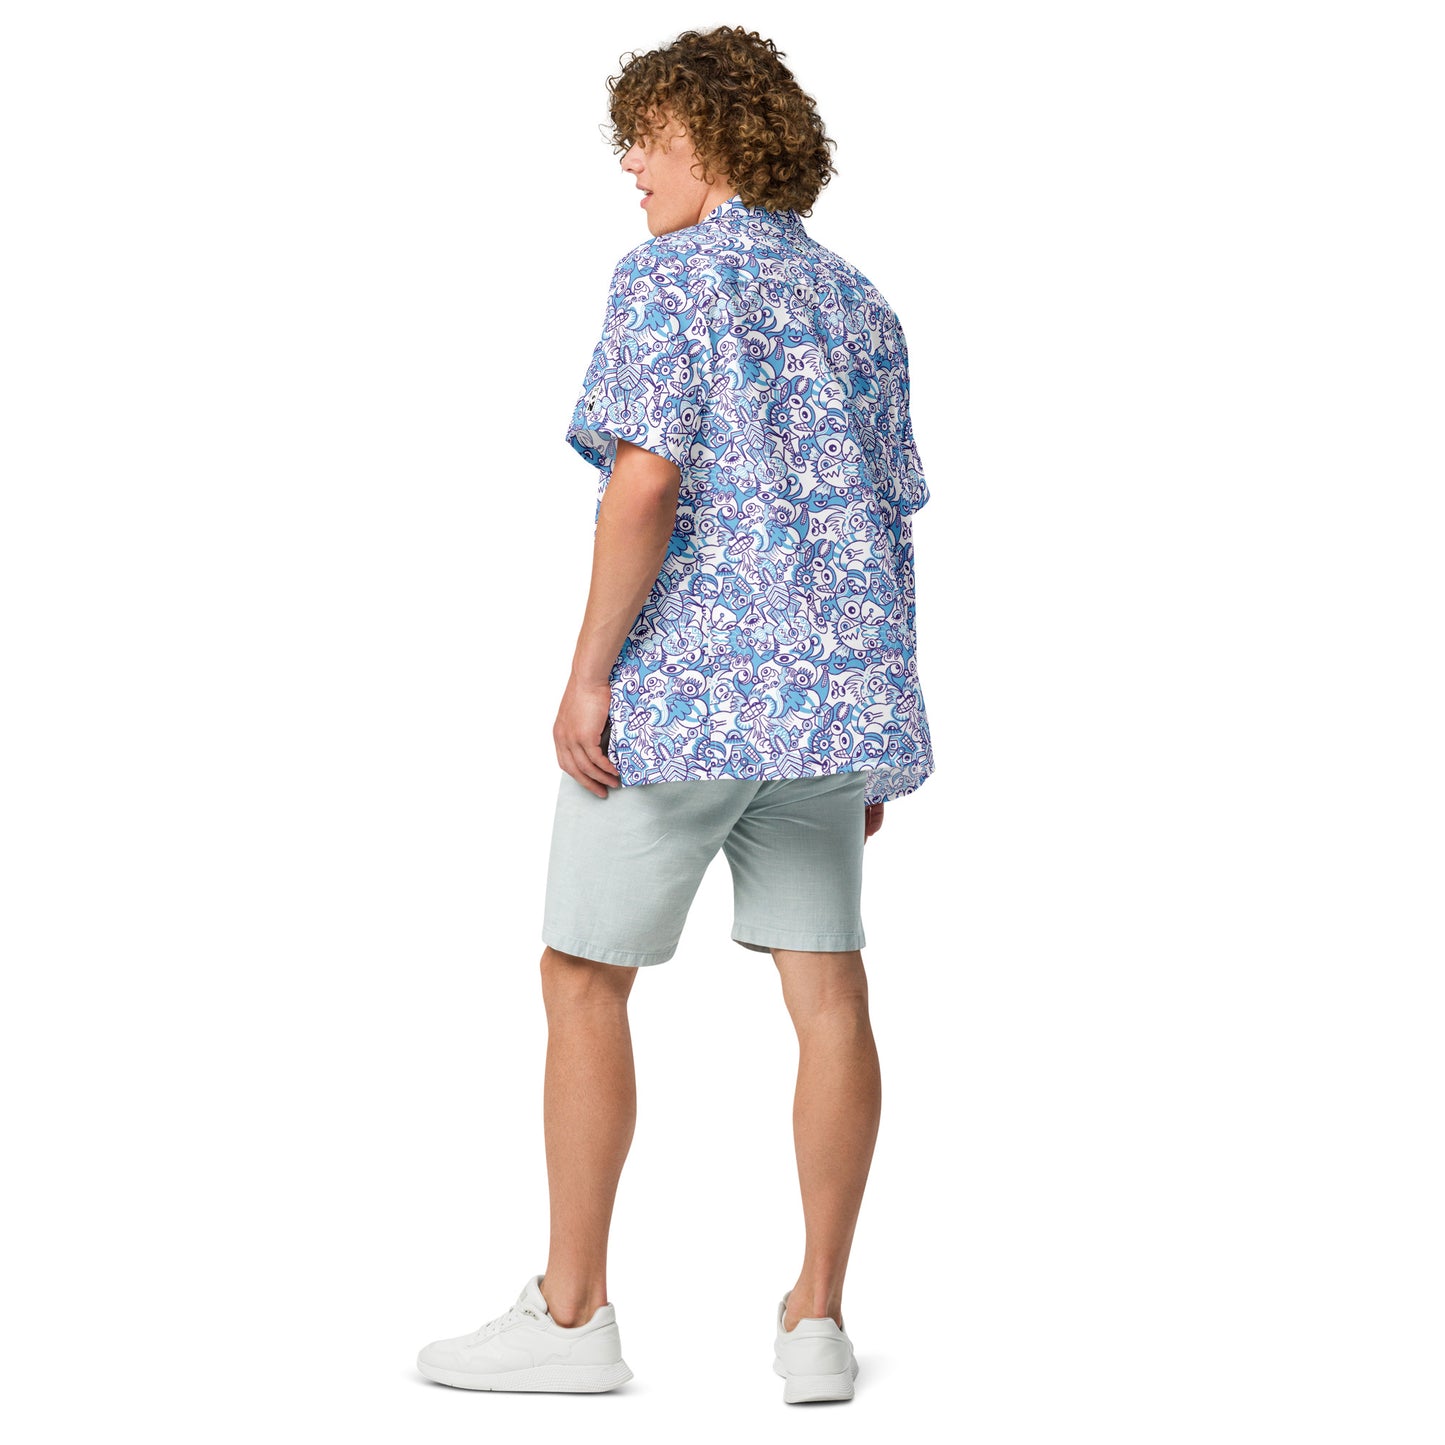 Whimsical Blue Doodle Critterscape pattern design Unisex button shirt. Back view